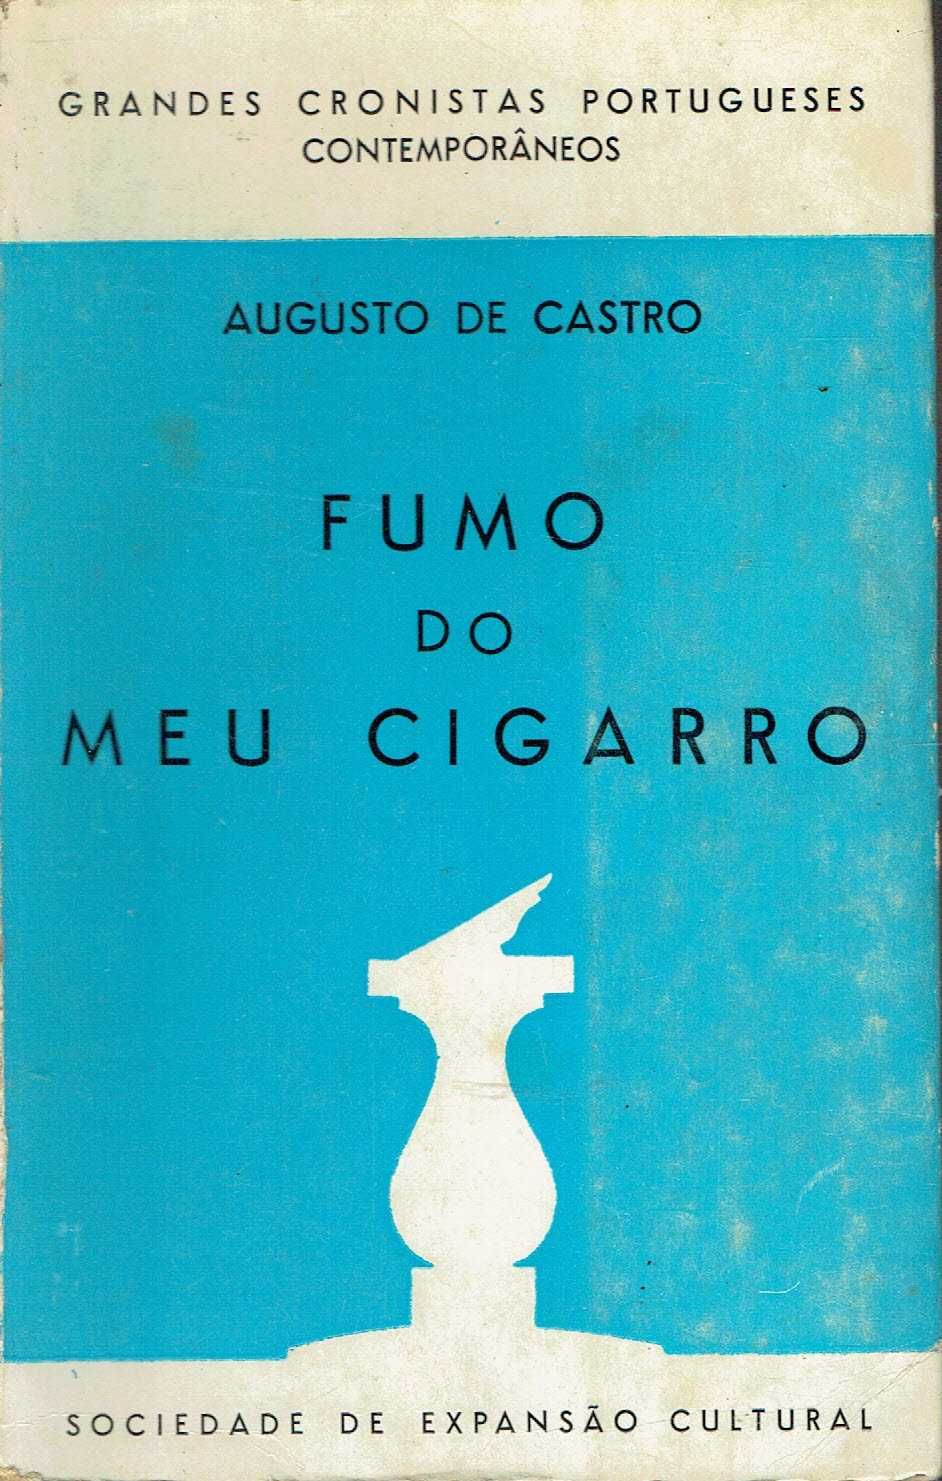 5463

Fumo do meu cigarro 
de Augusto de Castro